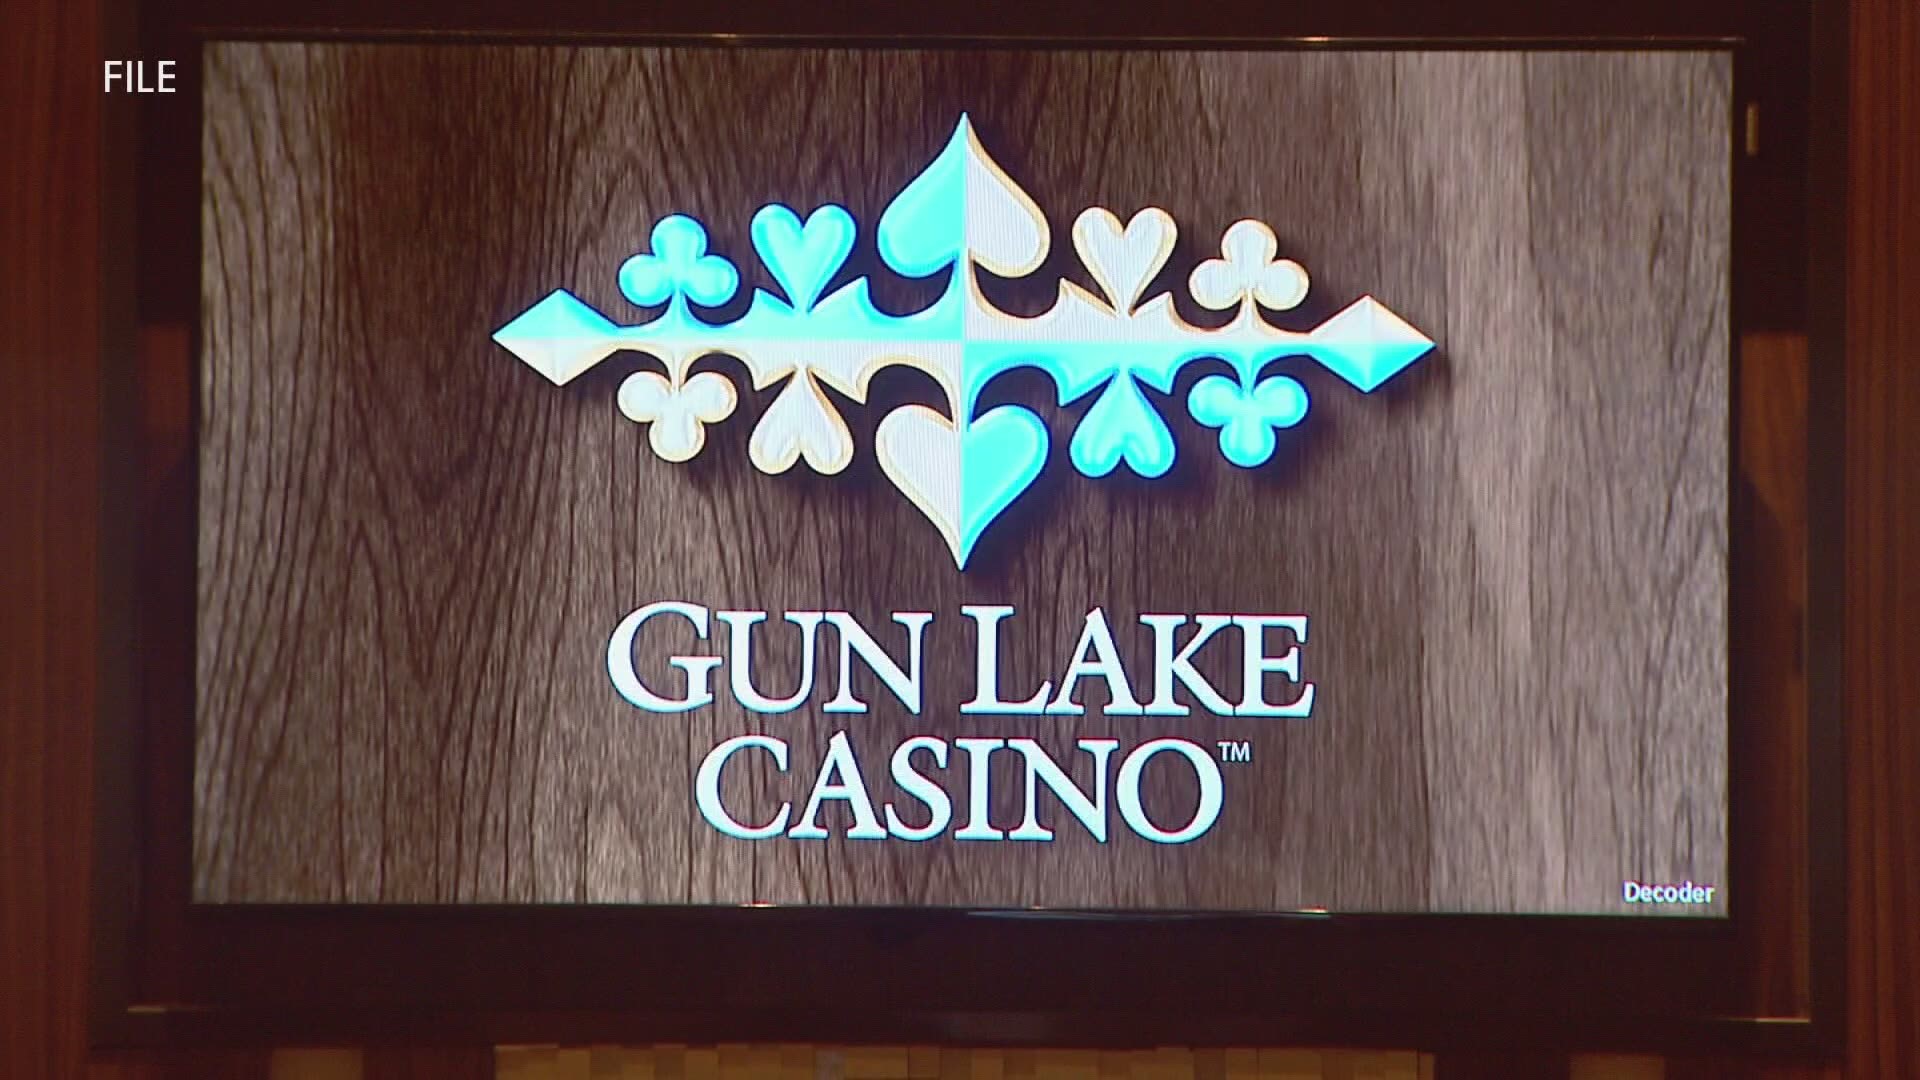 gun lake casino gift card